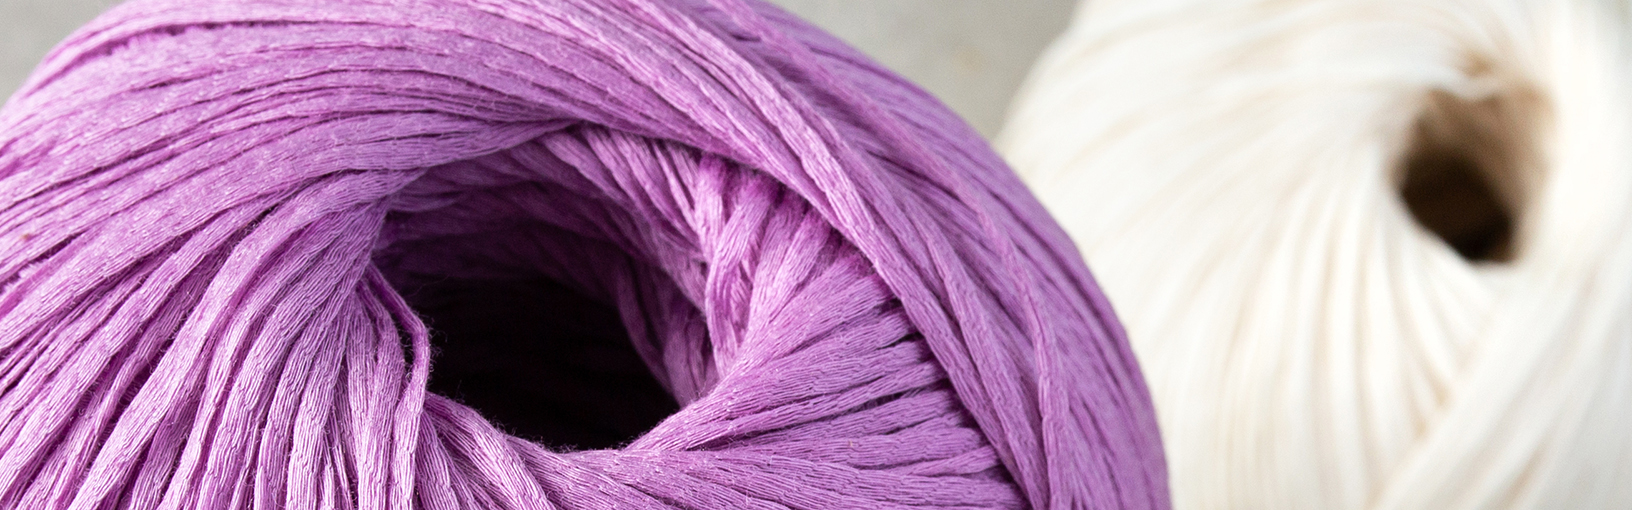 High quality yarns for knitting, crocheting & felting Lana Grossa Yarns | Sock yarns